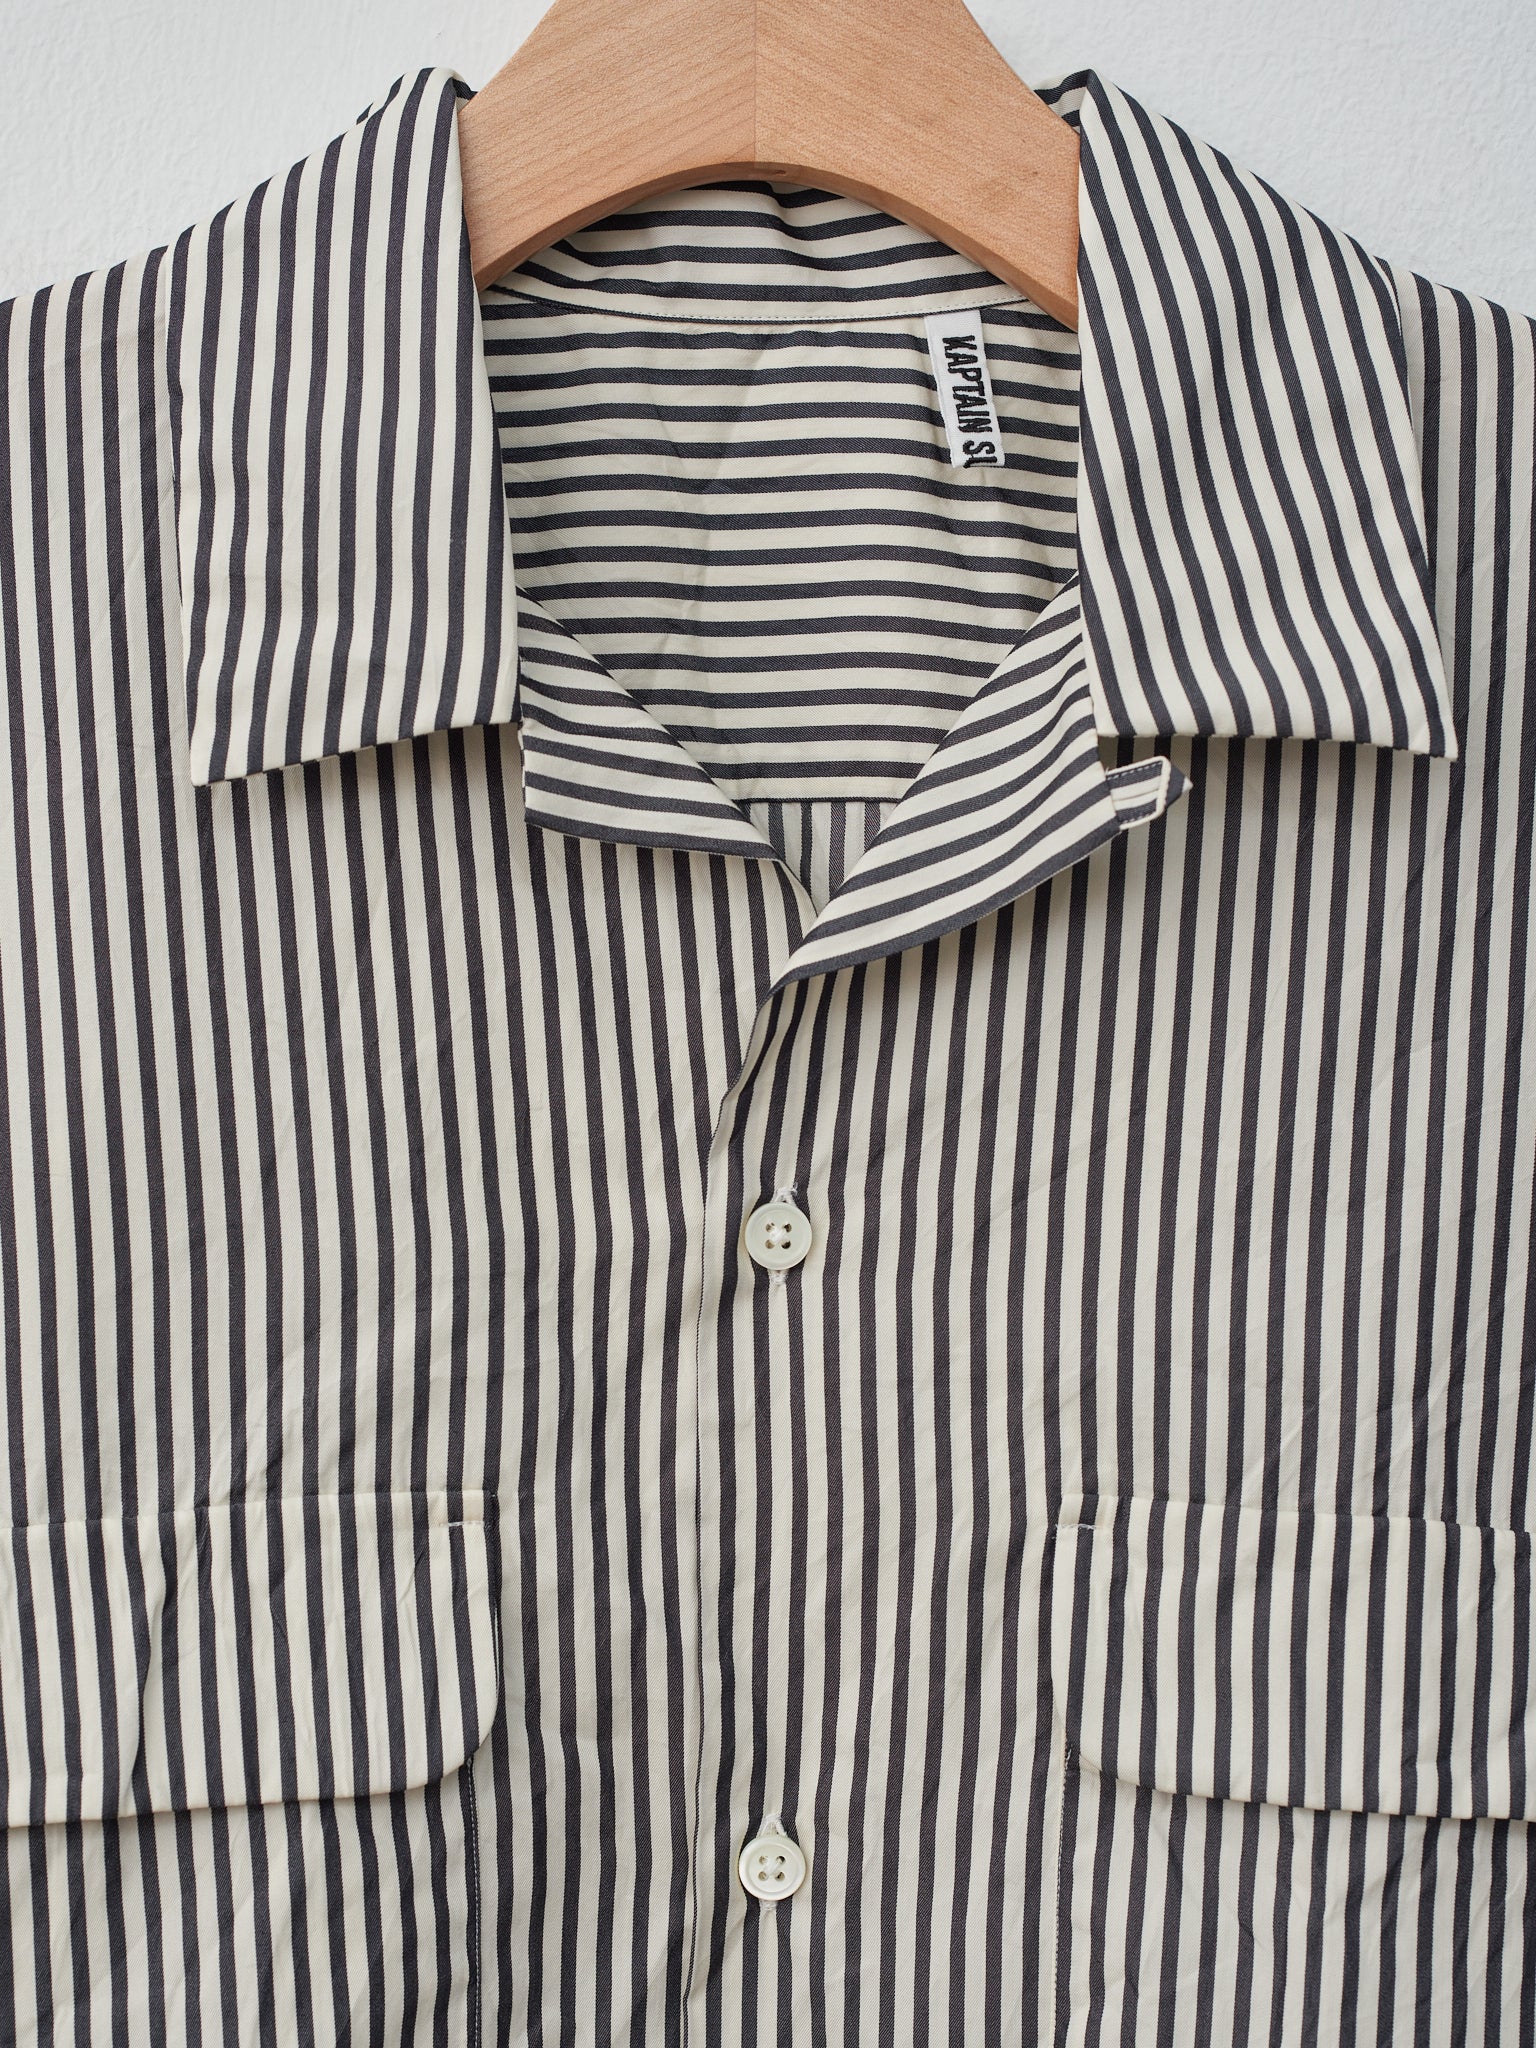 Namu Shop - Kaptain Sunshine Short Sleeve Open Collar Shirt - Hickory Stripe